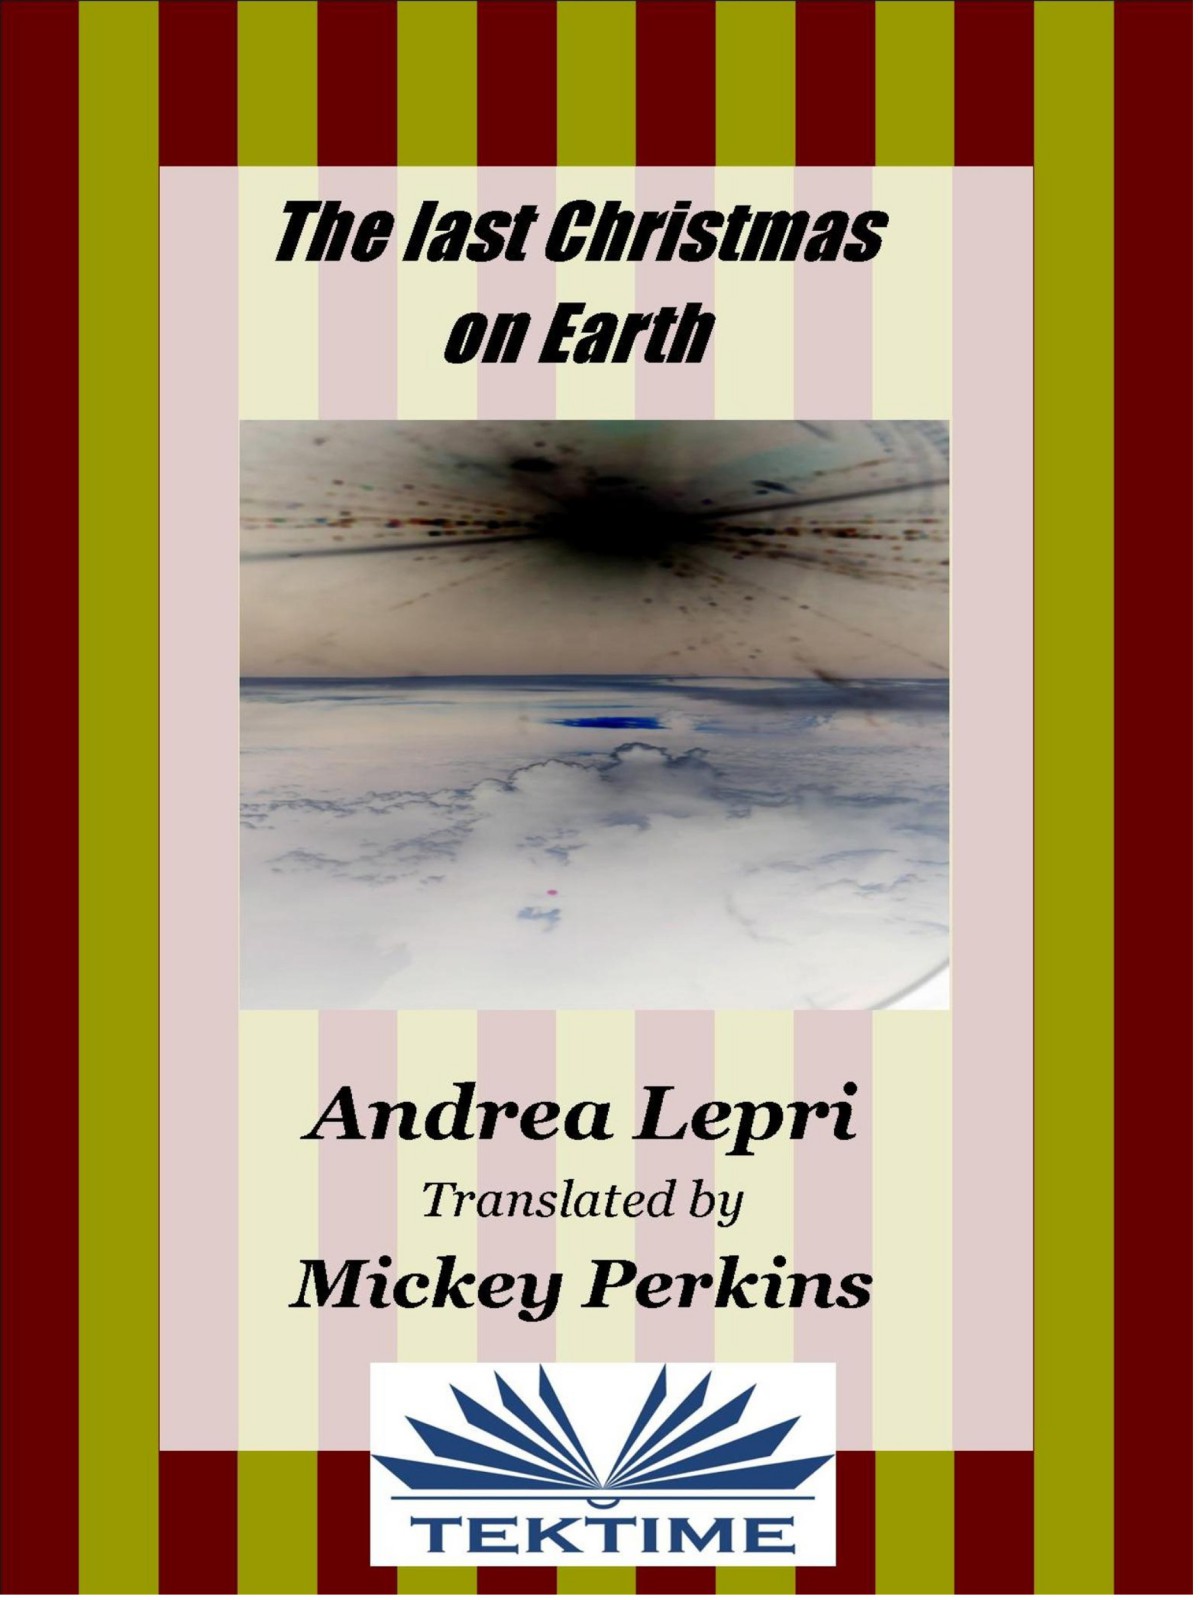 The last Christmas on Earth